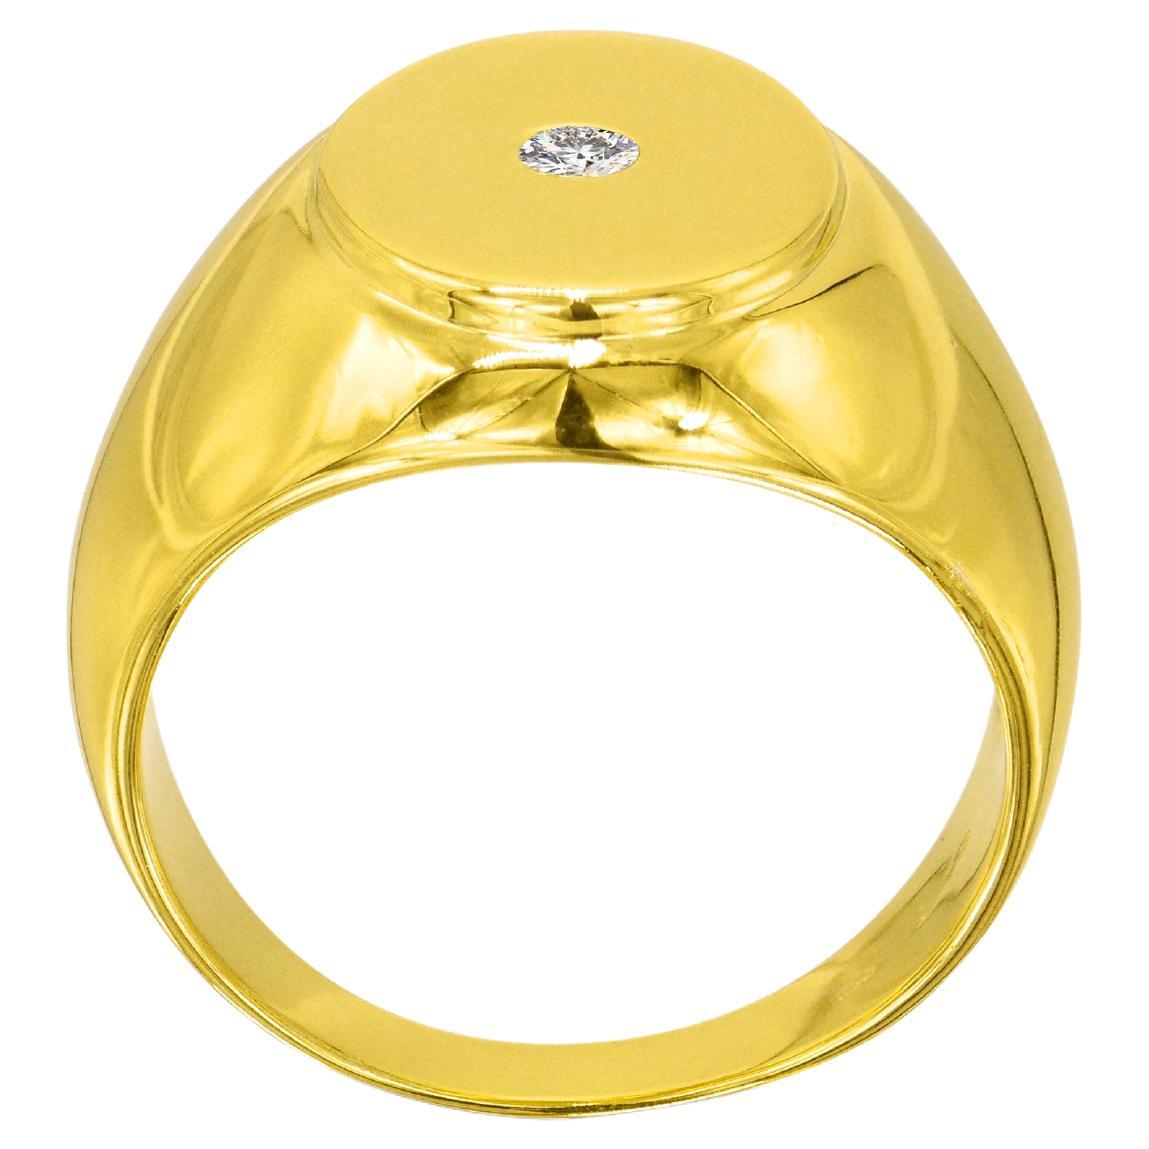 18K Gold filled Signet ring with 0.06 Carat Natural Diamond